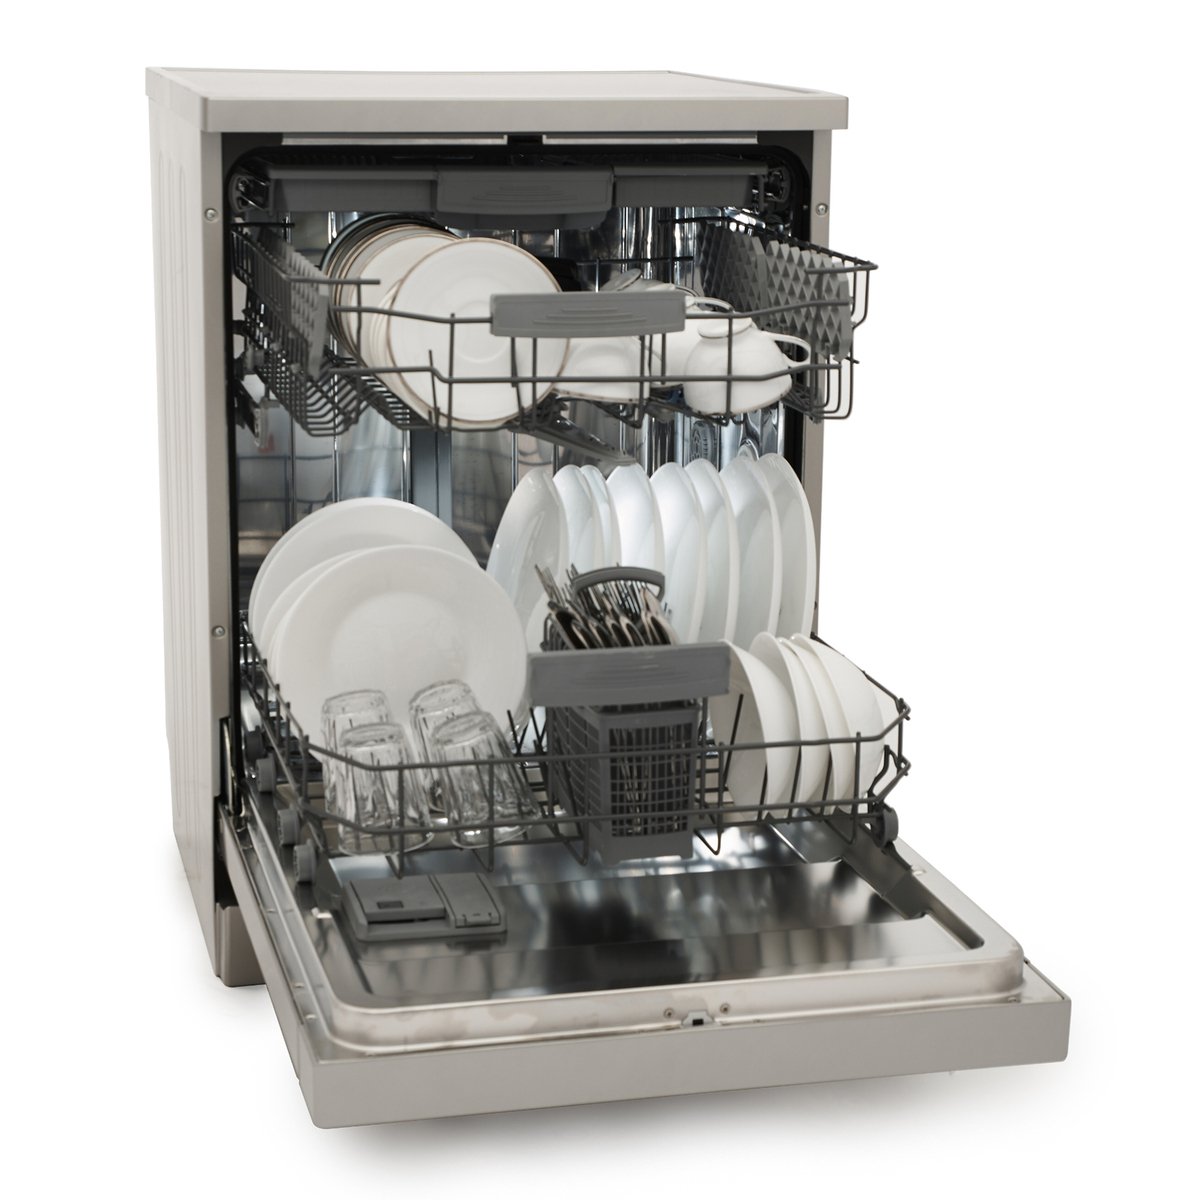 Hoover Dishwasher HDW-V1015-S 15 Place Settings 10 Programs